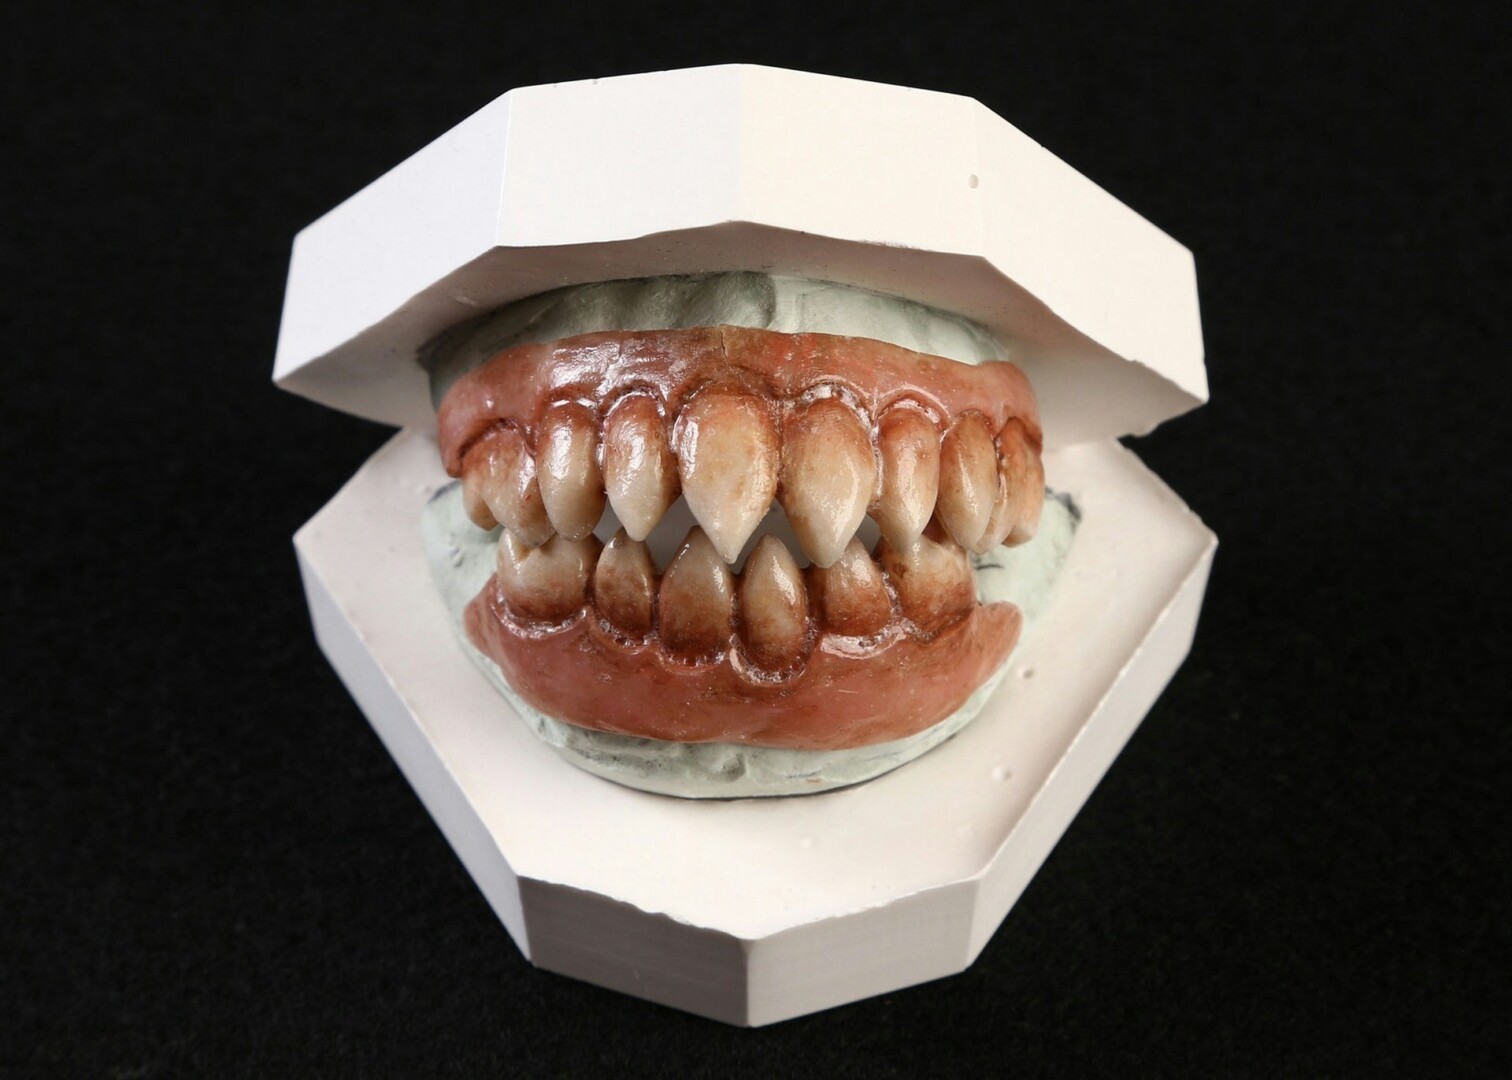 A model of sharp, inhuman 3D printed teeth.